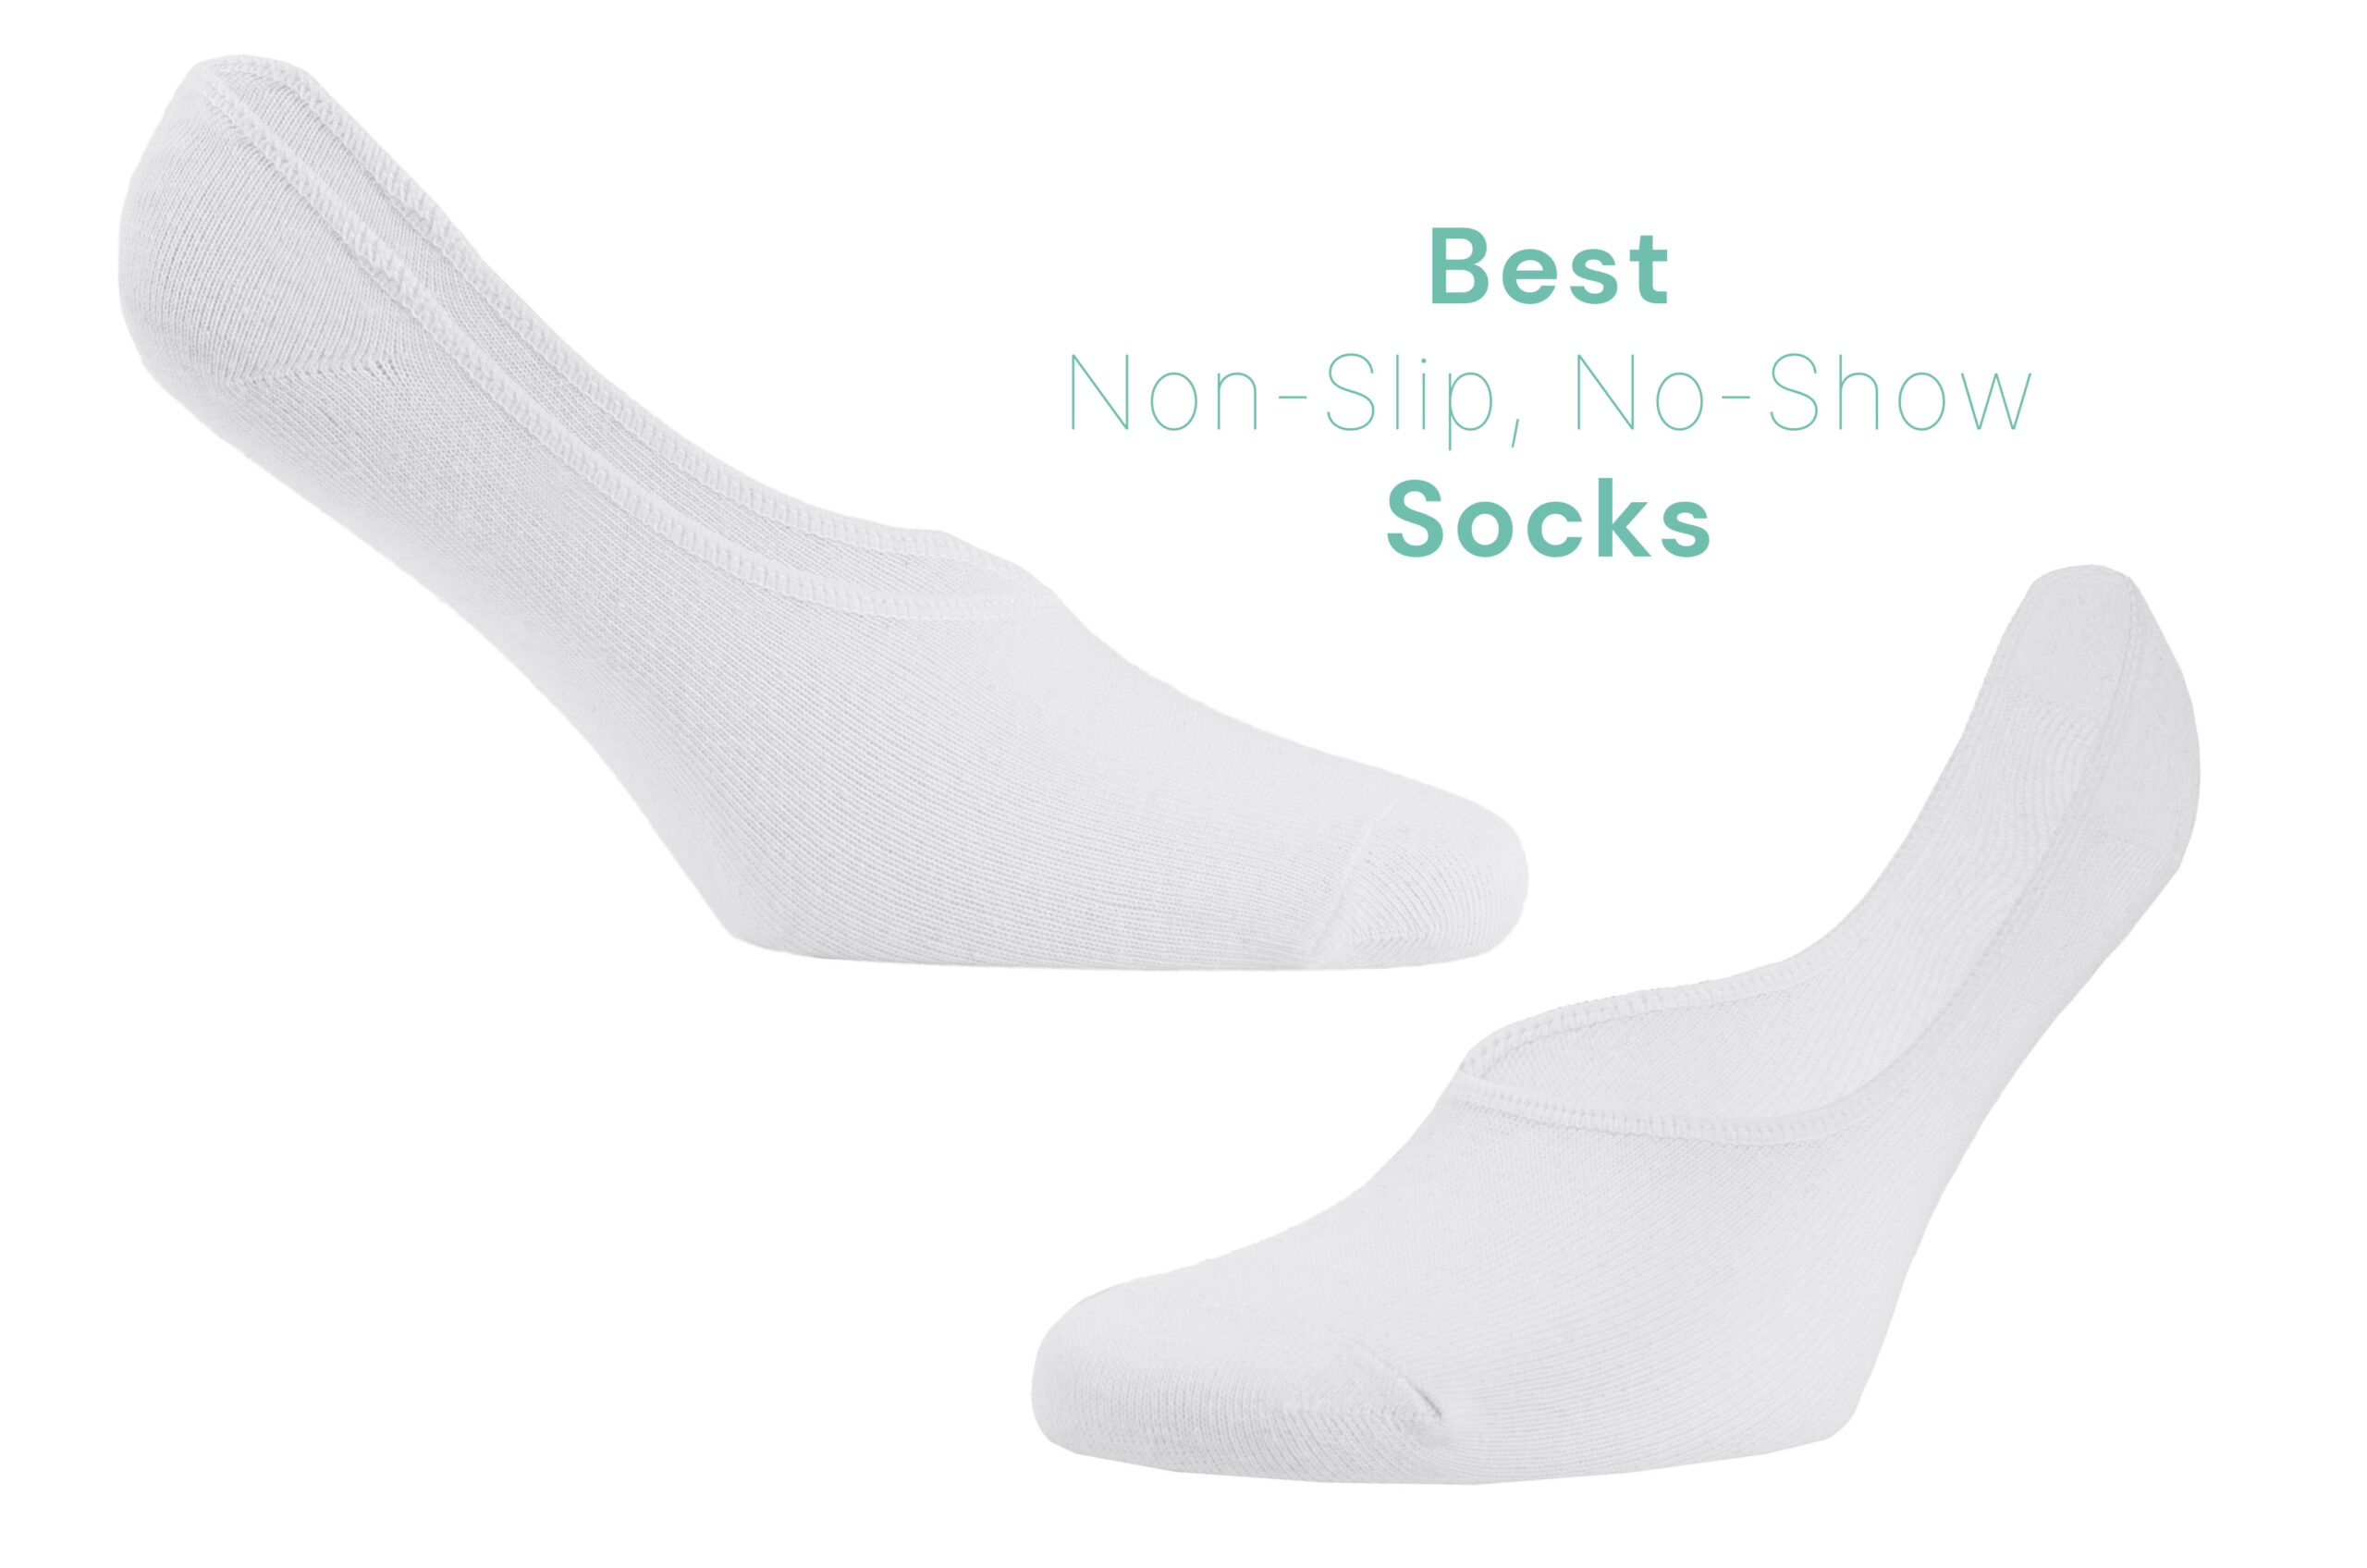 The Best Non-Slip, No-Show Socks for Women • Ask Bronna